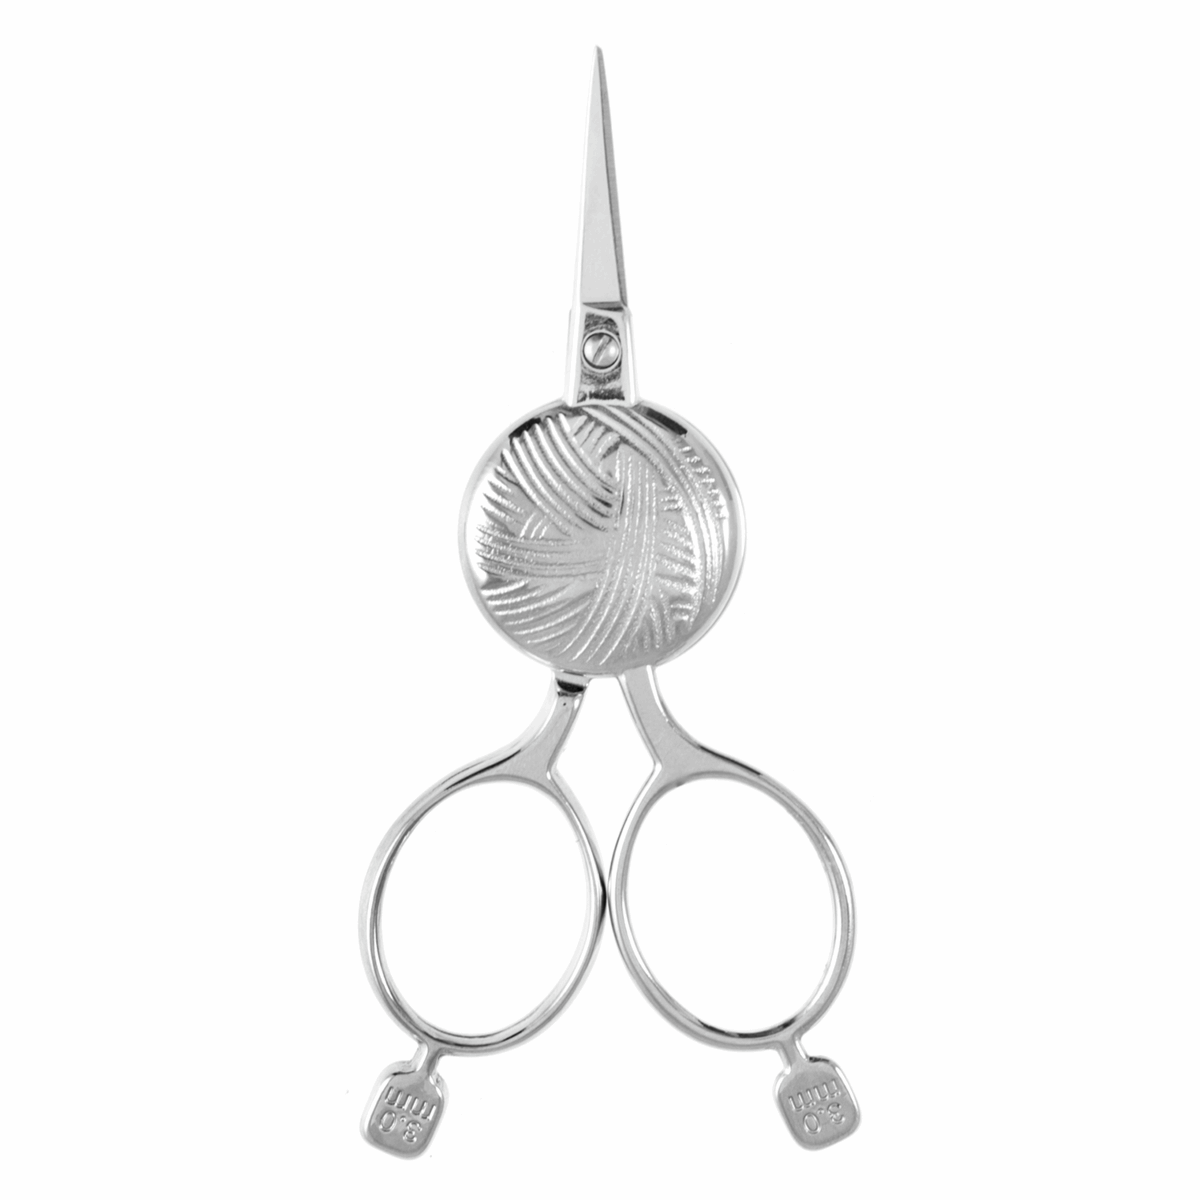 Embroidery Scissors - Yarn Ball Design - 10cm (3.9in) Silver